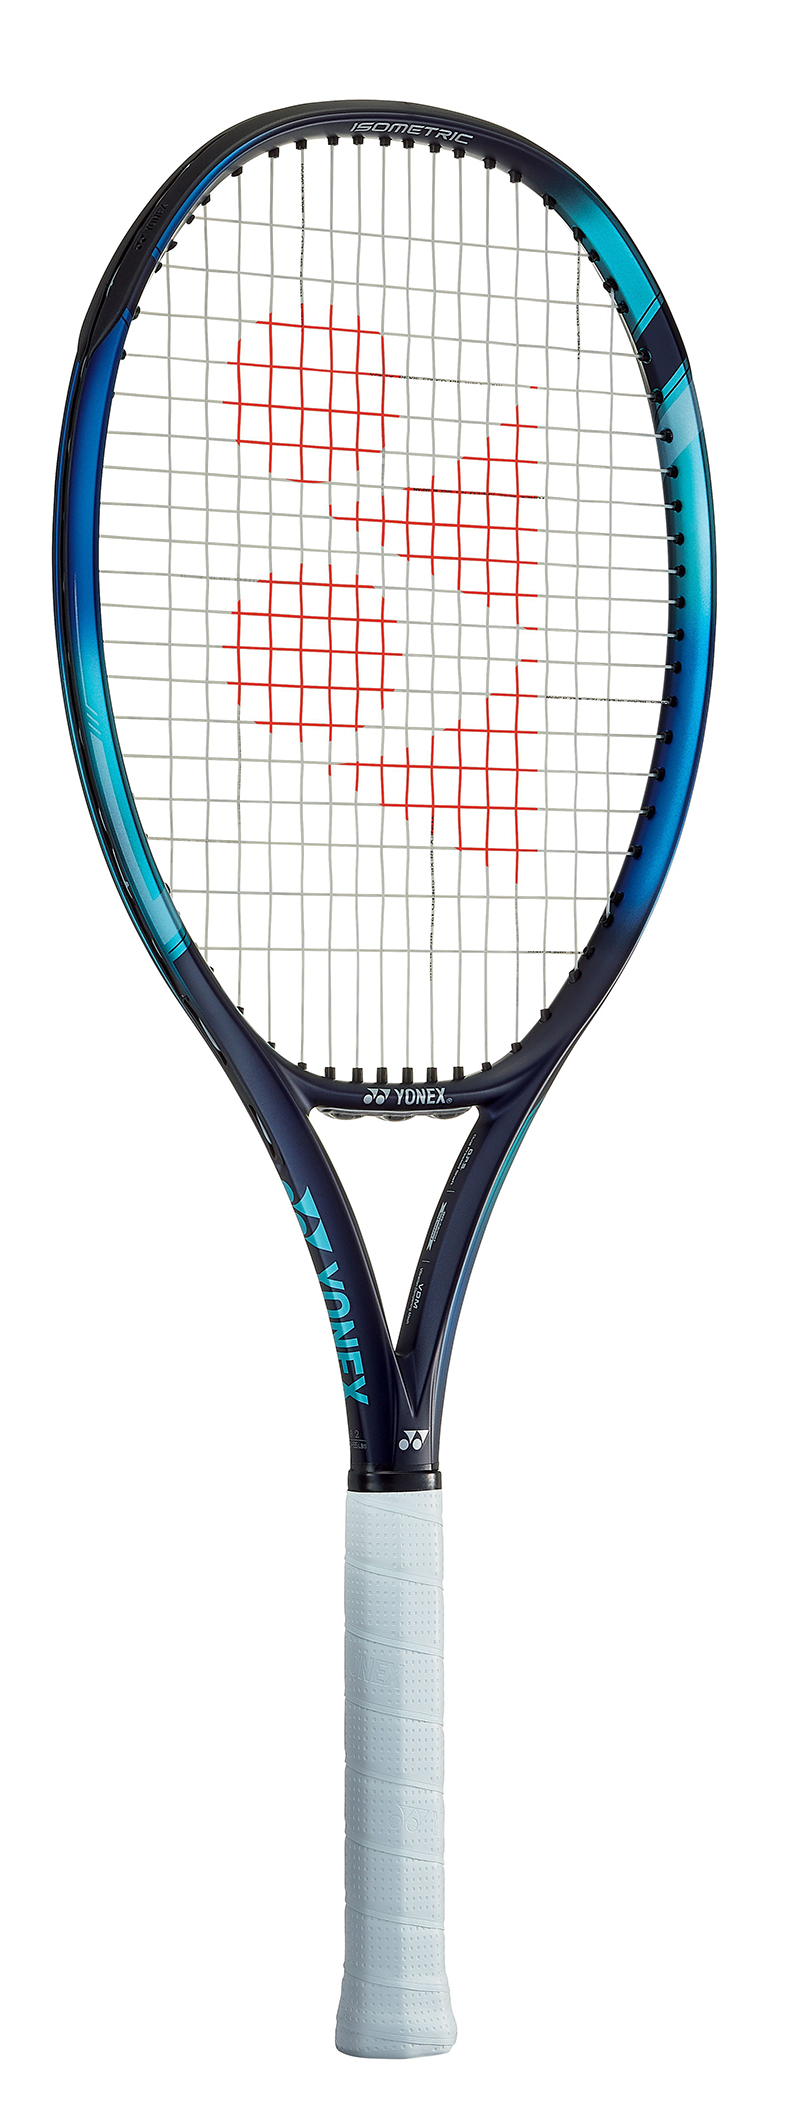 Details about   Wilson Ultra 108 V3.0 Tennis Racquet Racket String 100sq 270g G2 16x18 WR036711 